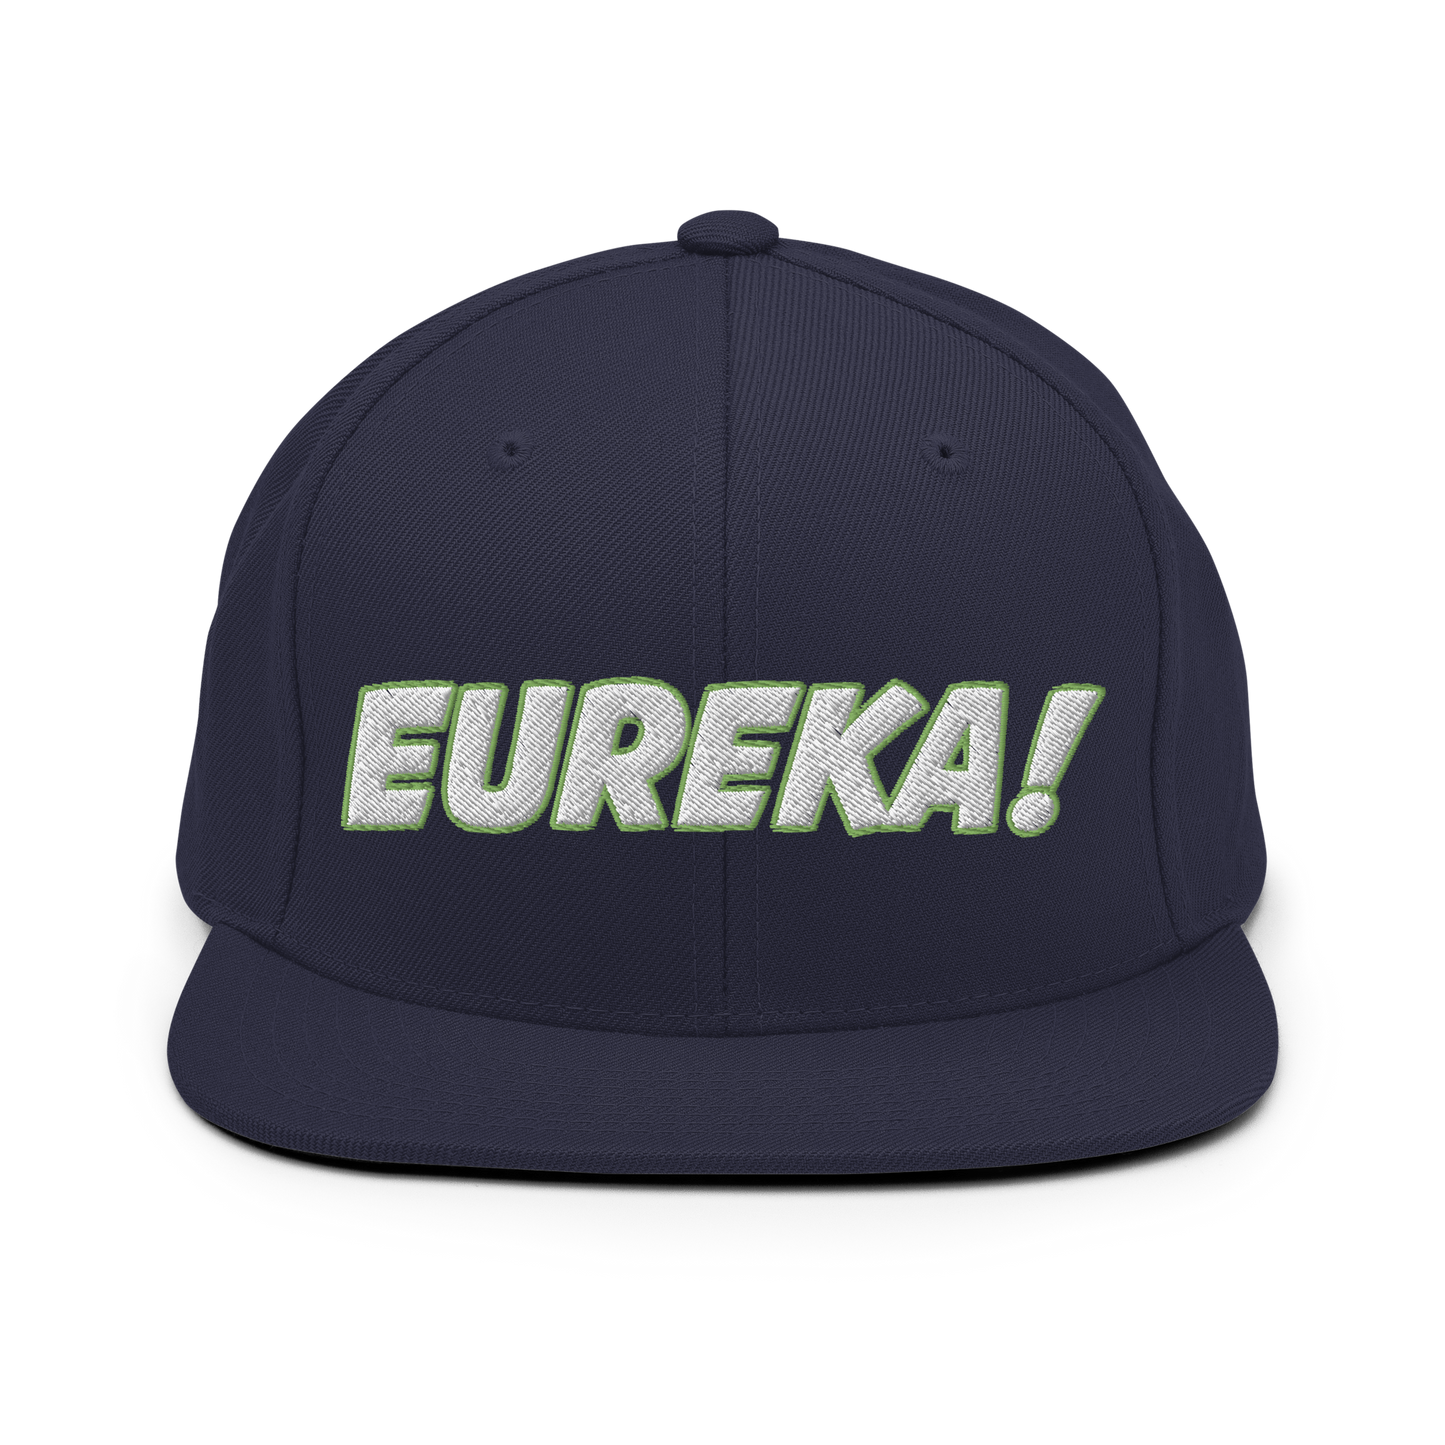 The Green Rush "Eureka!" - Snapback Hat (Dark)